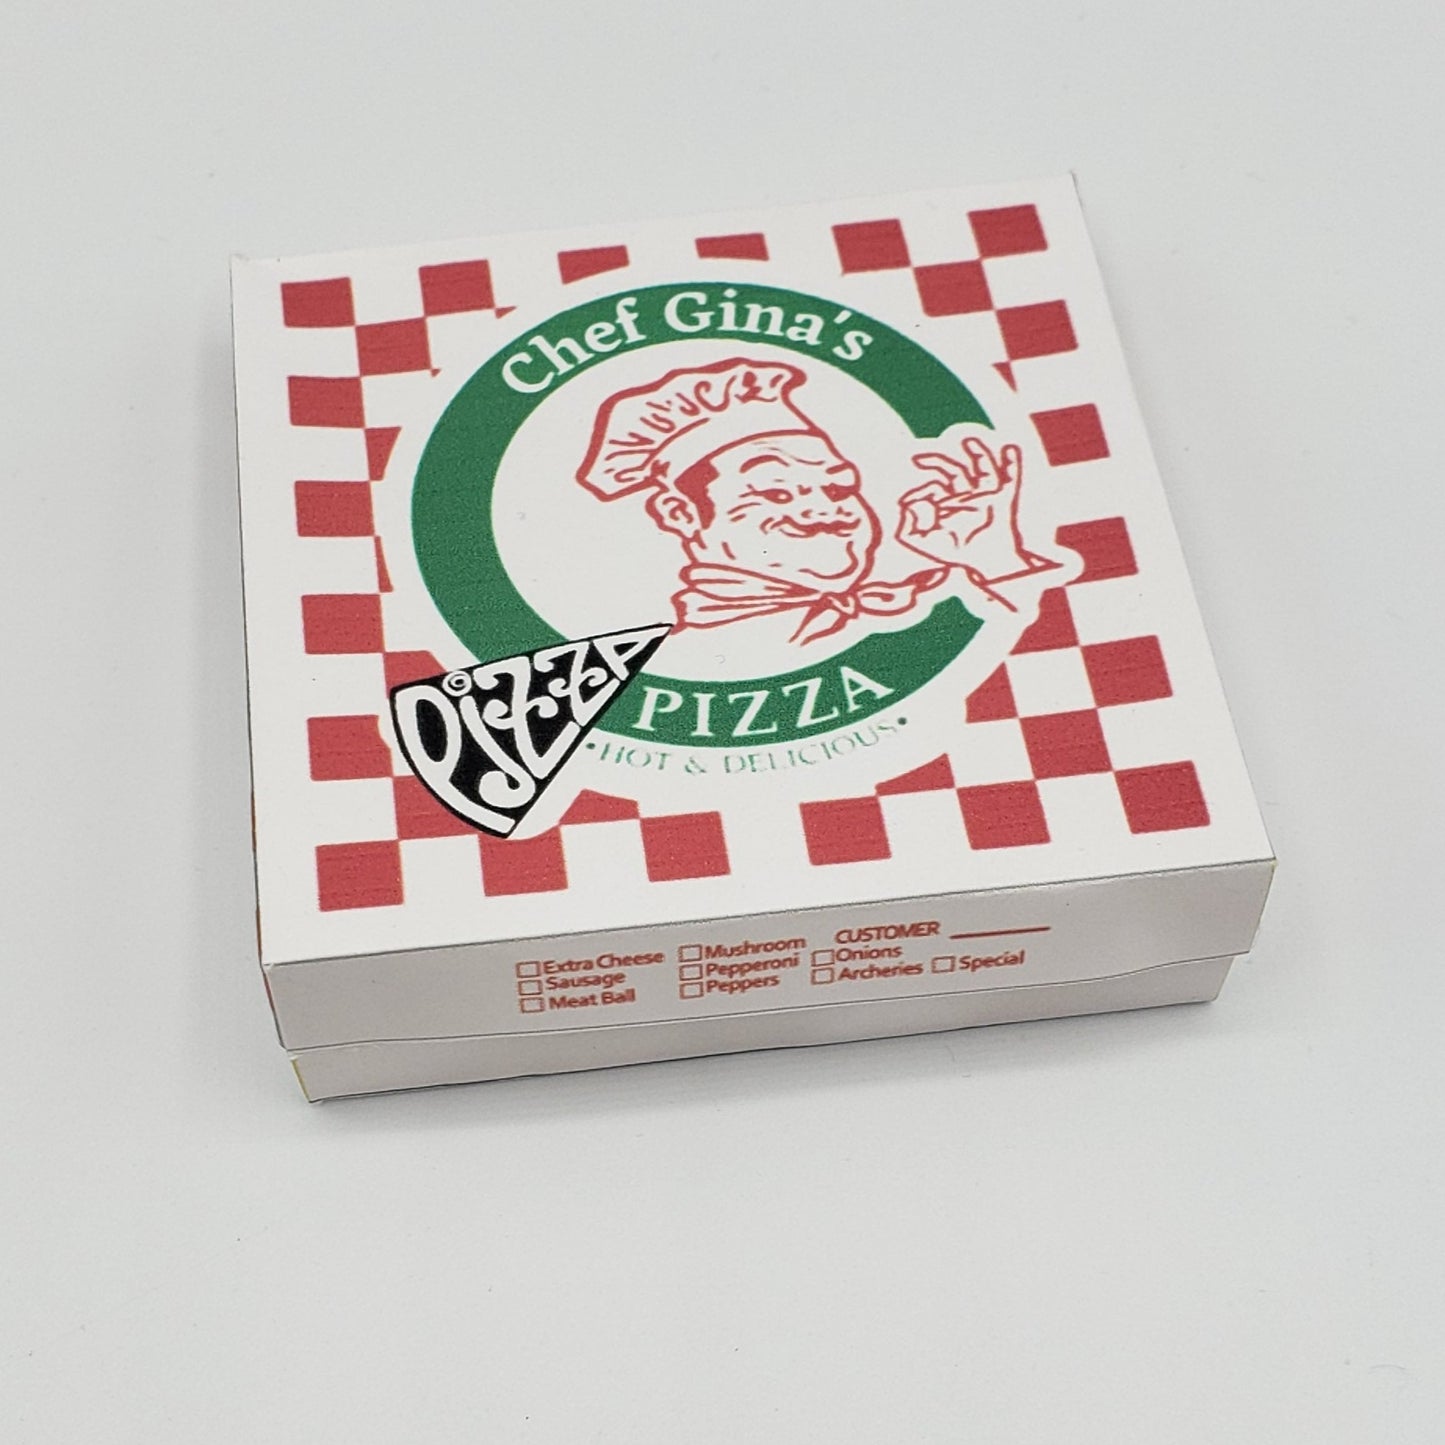 Chef ginas pizza box